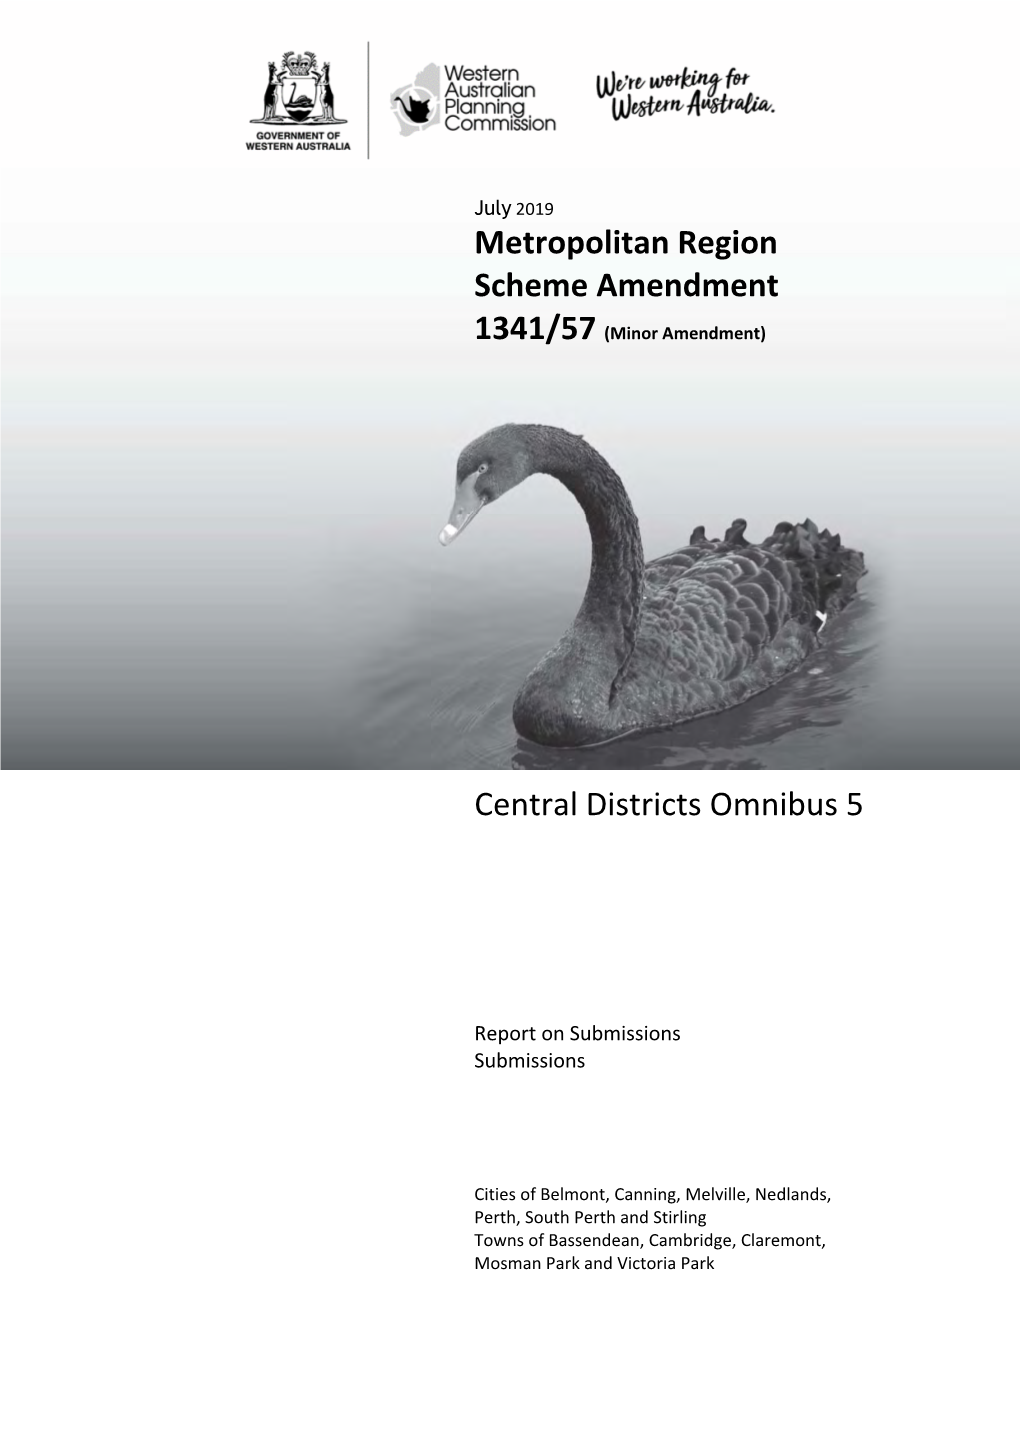 Metropolitan Region Scheme Amendment Central Districts